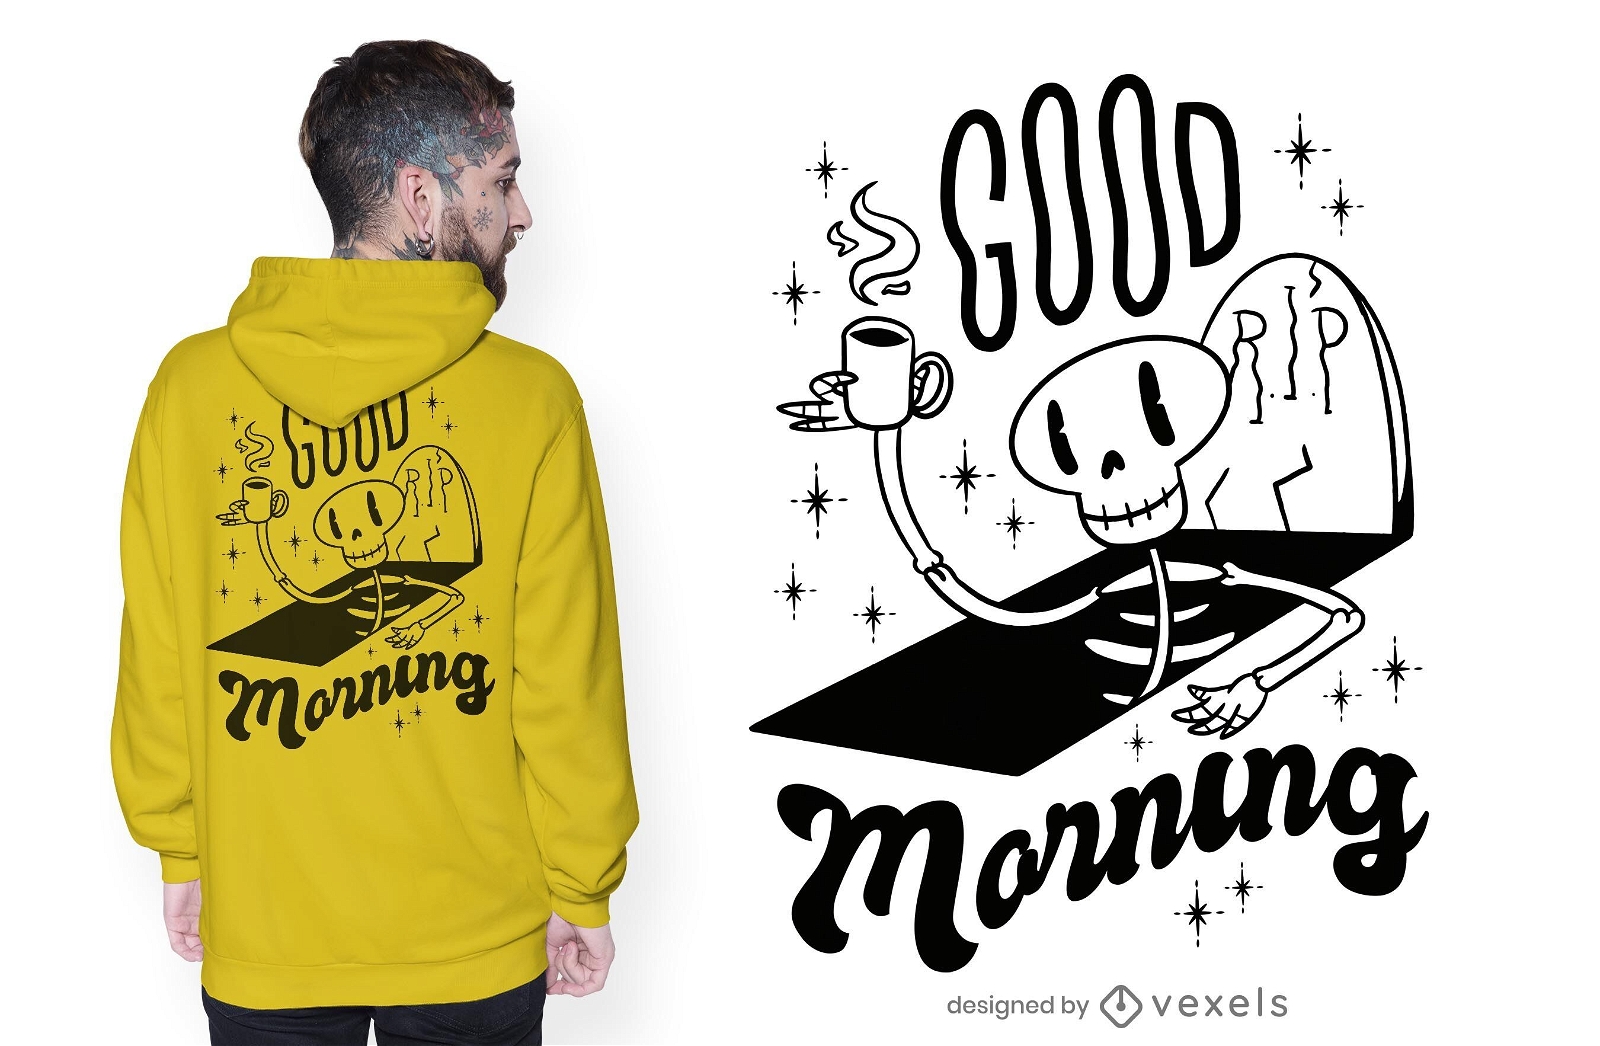 Good morning t-shirt design